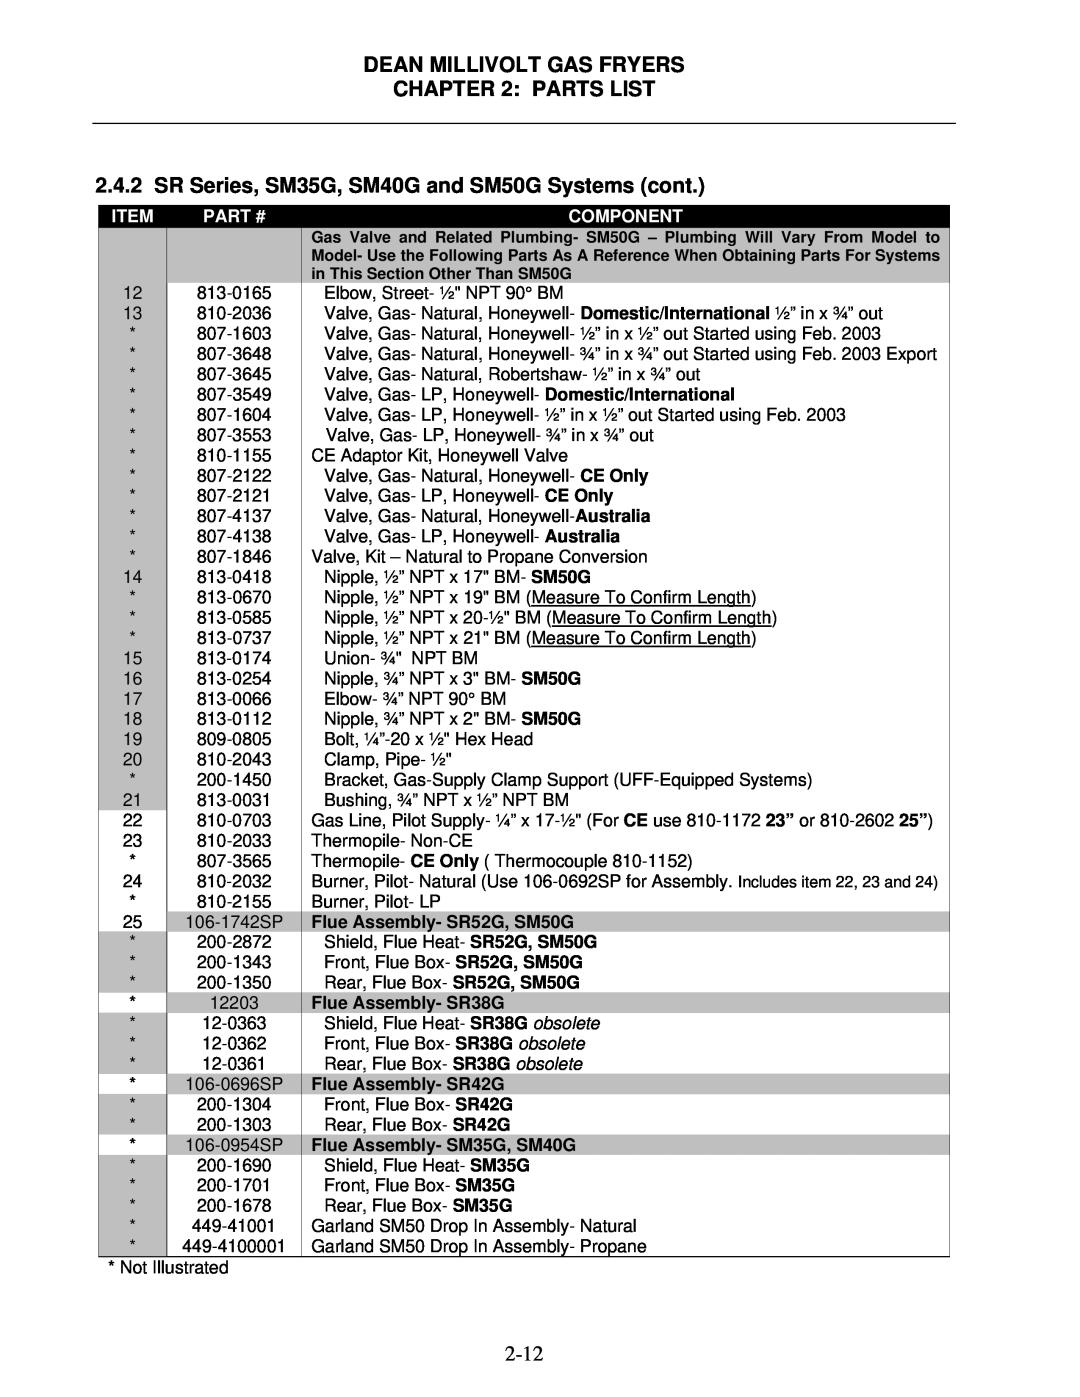 Frymaster Super Marathon Series Dean Millivolt Gas Fryers : Parts List, Item, Part #, Component, Flue Assembly- SR38G 